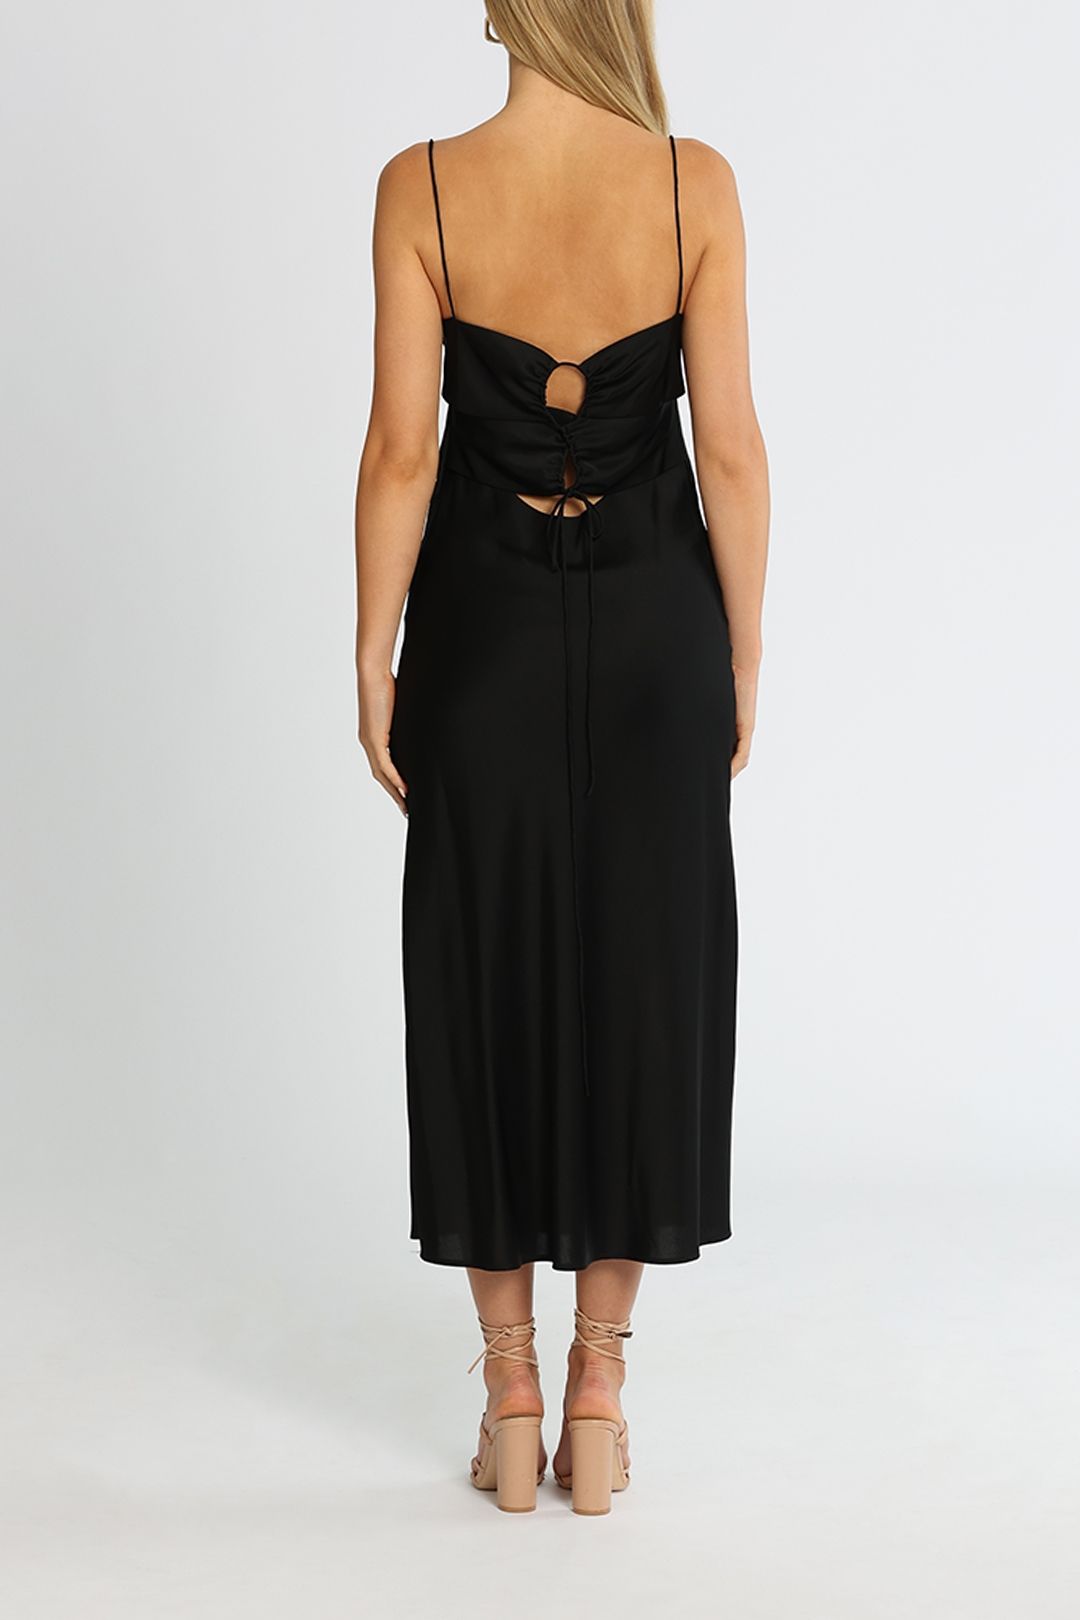 Clea Estelle Slip Dress Black Cutout